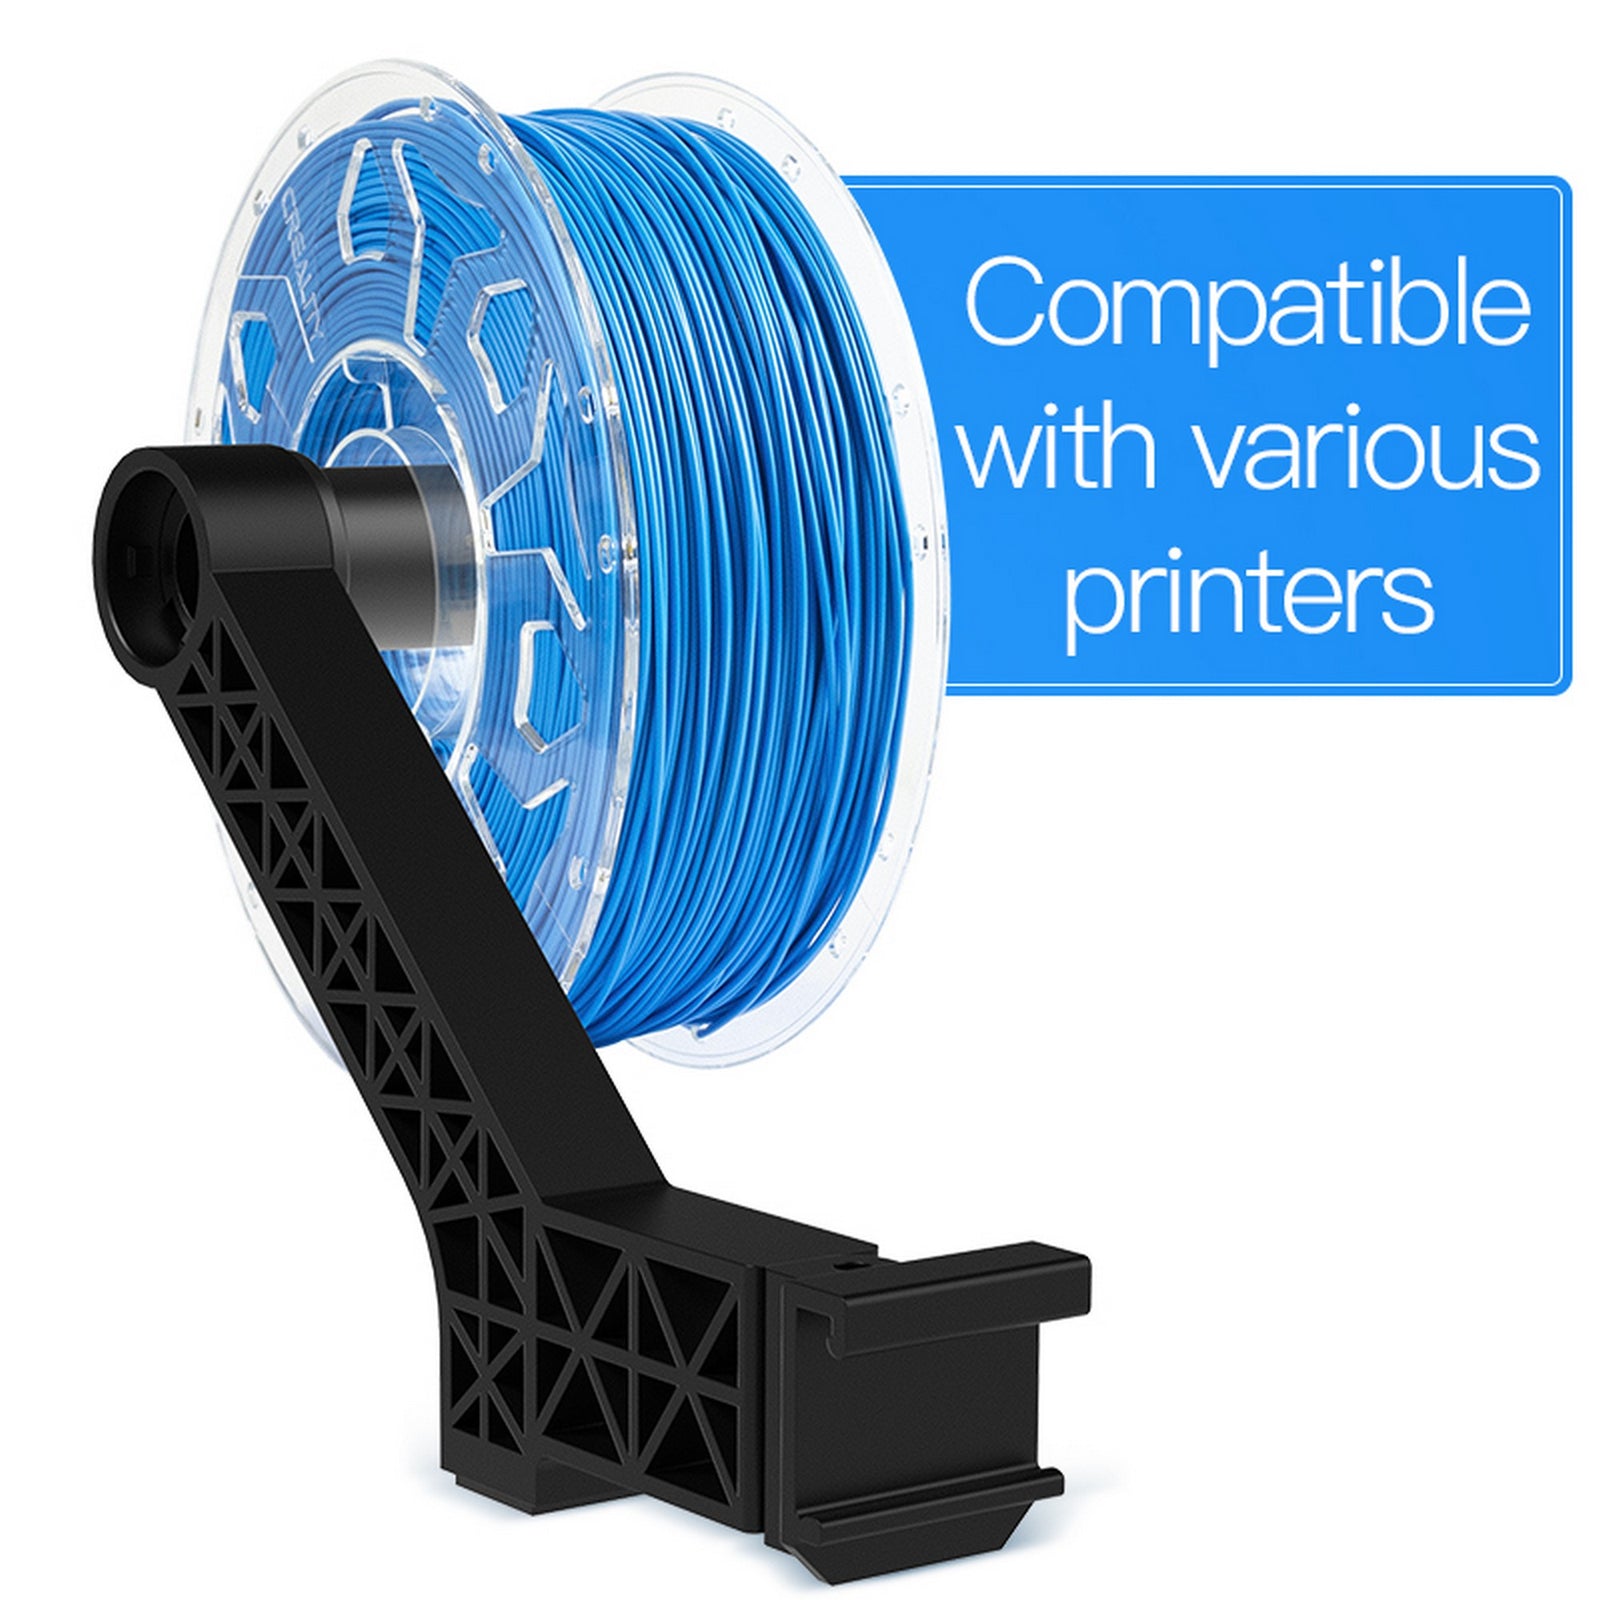 Creality 3D Printer Filament Spool Holder Kit - 2 C43a9716 65D4 438a A394 4ce0686Da47f 1600x